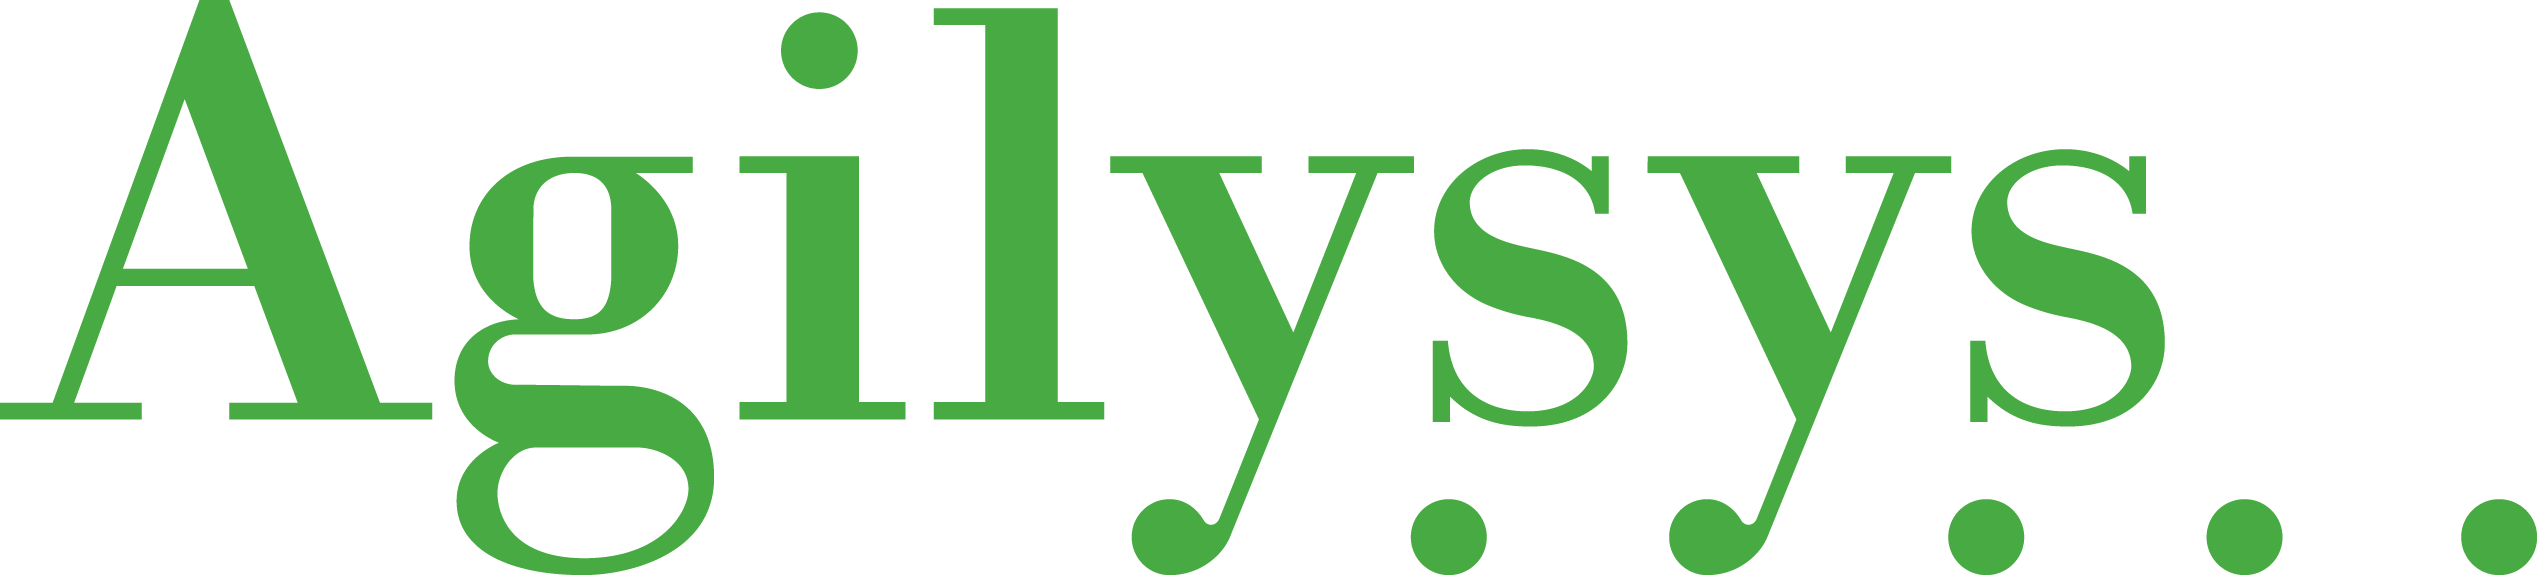 Image shows Agilysys company logo